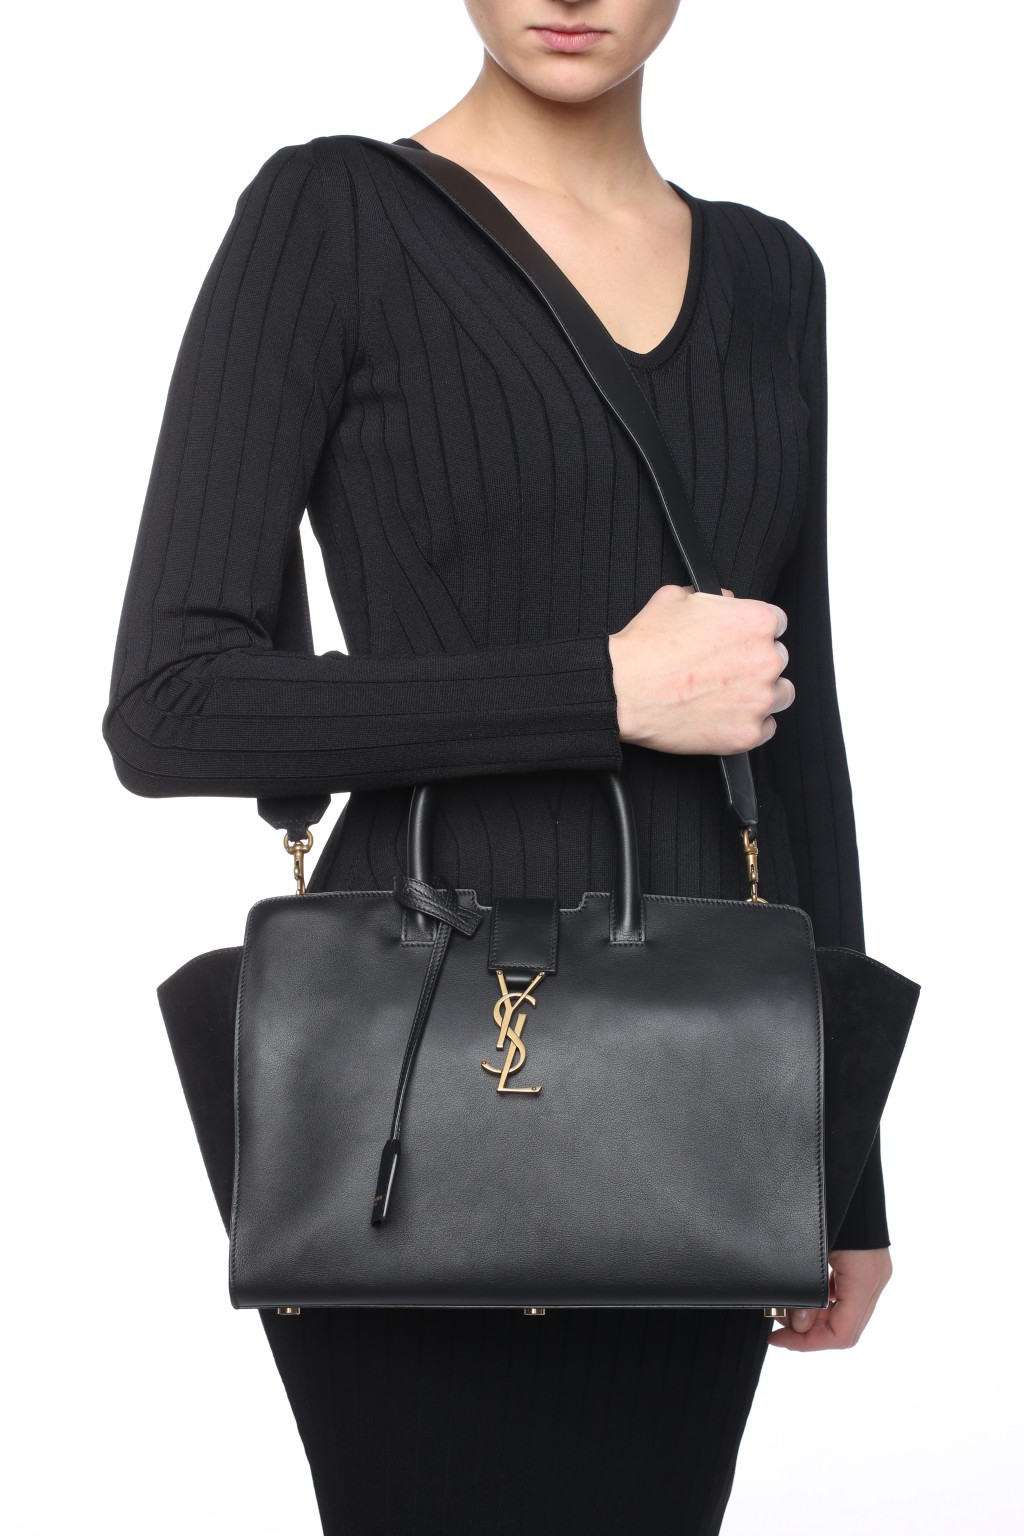 Saint Laurent 'Cabas Monogram' Handbag, Women's Bags